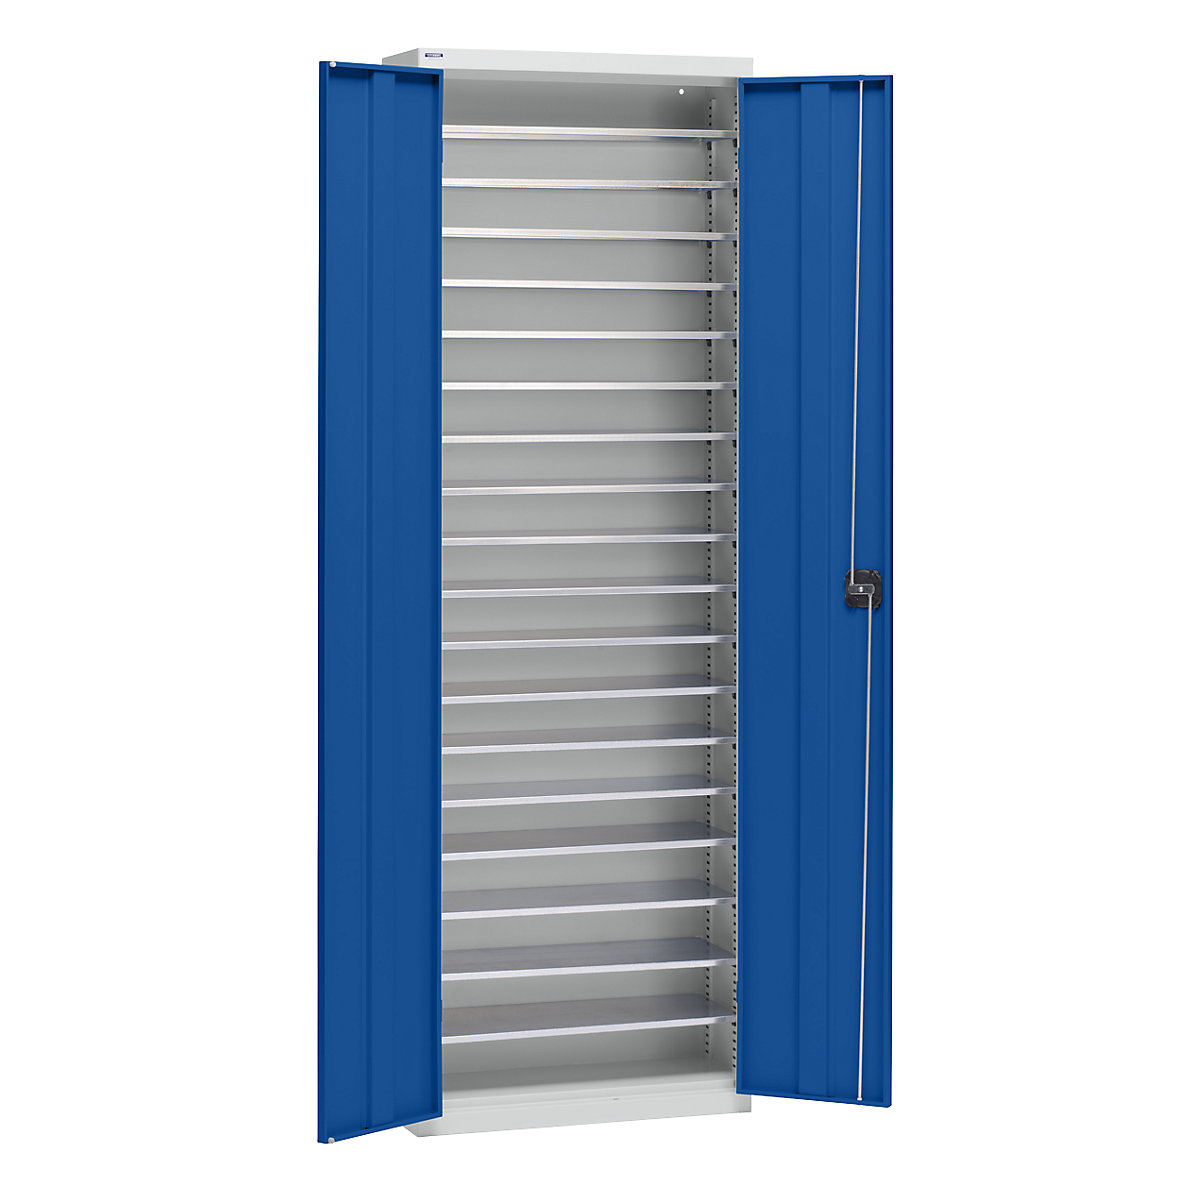 Storage cupboard made of sheet steel – eurokraft pro, height 2000 mm, light grey RAL 7035 / gentian blue RAL 5010, 18 shelves-7